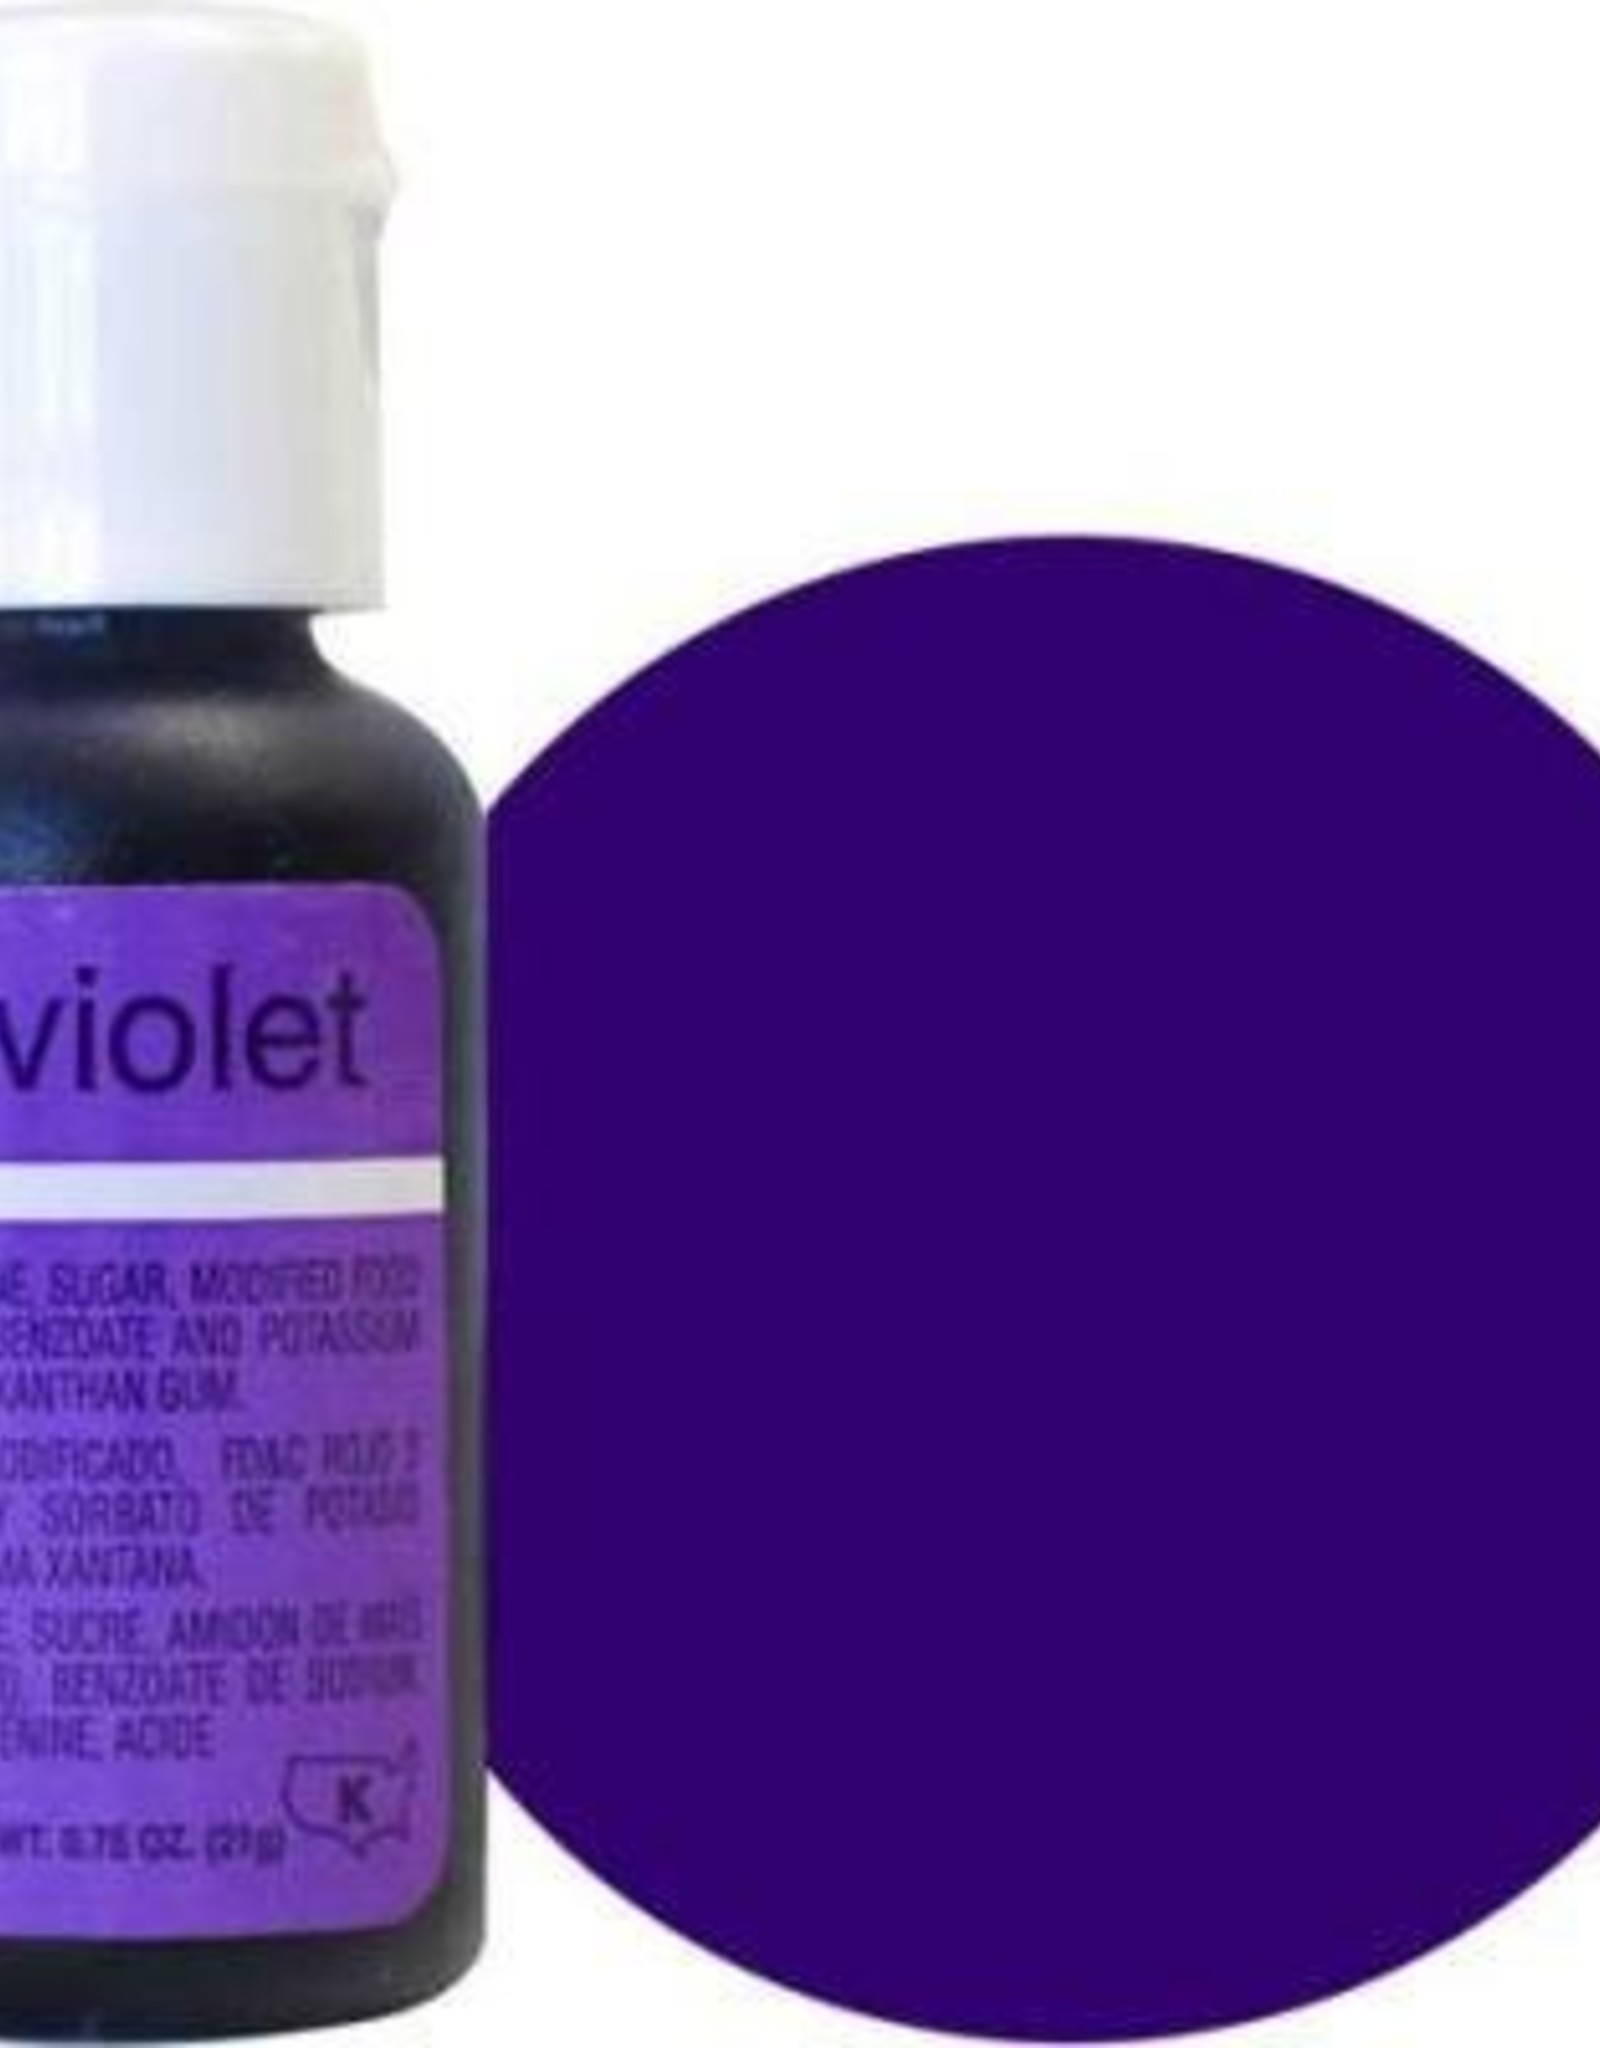 Violet Chefmaster Liqua-gel 3/4 ounce